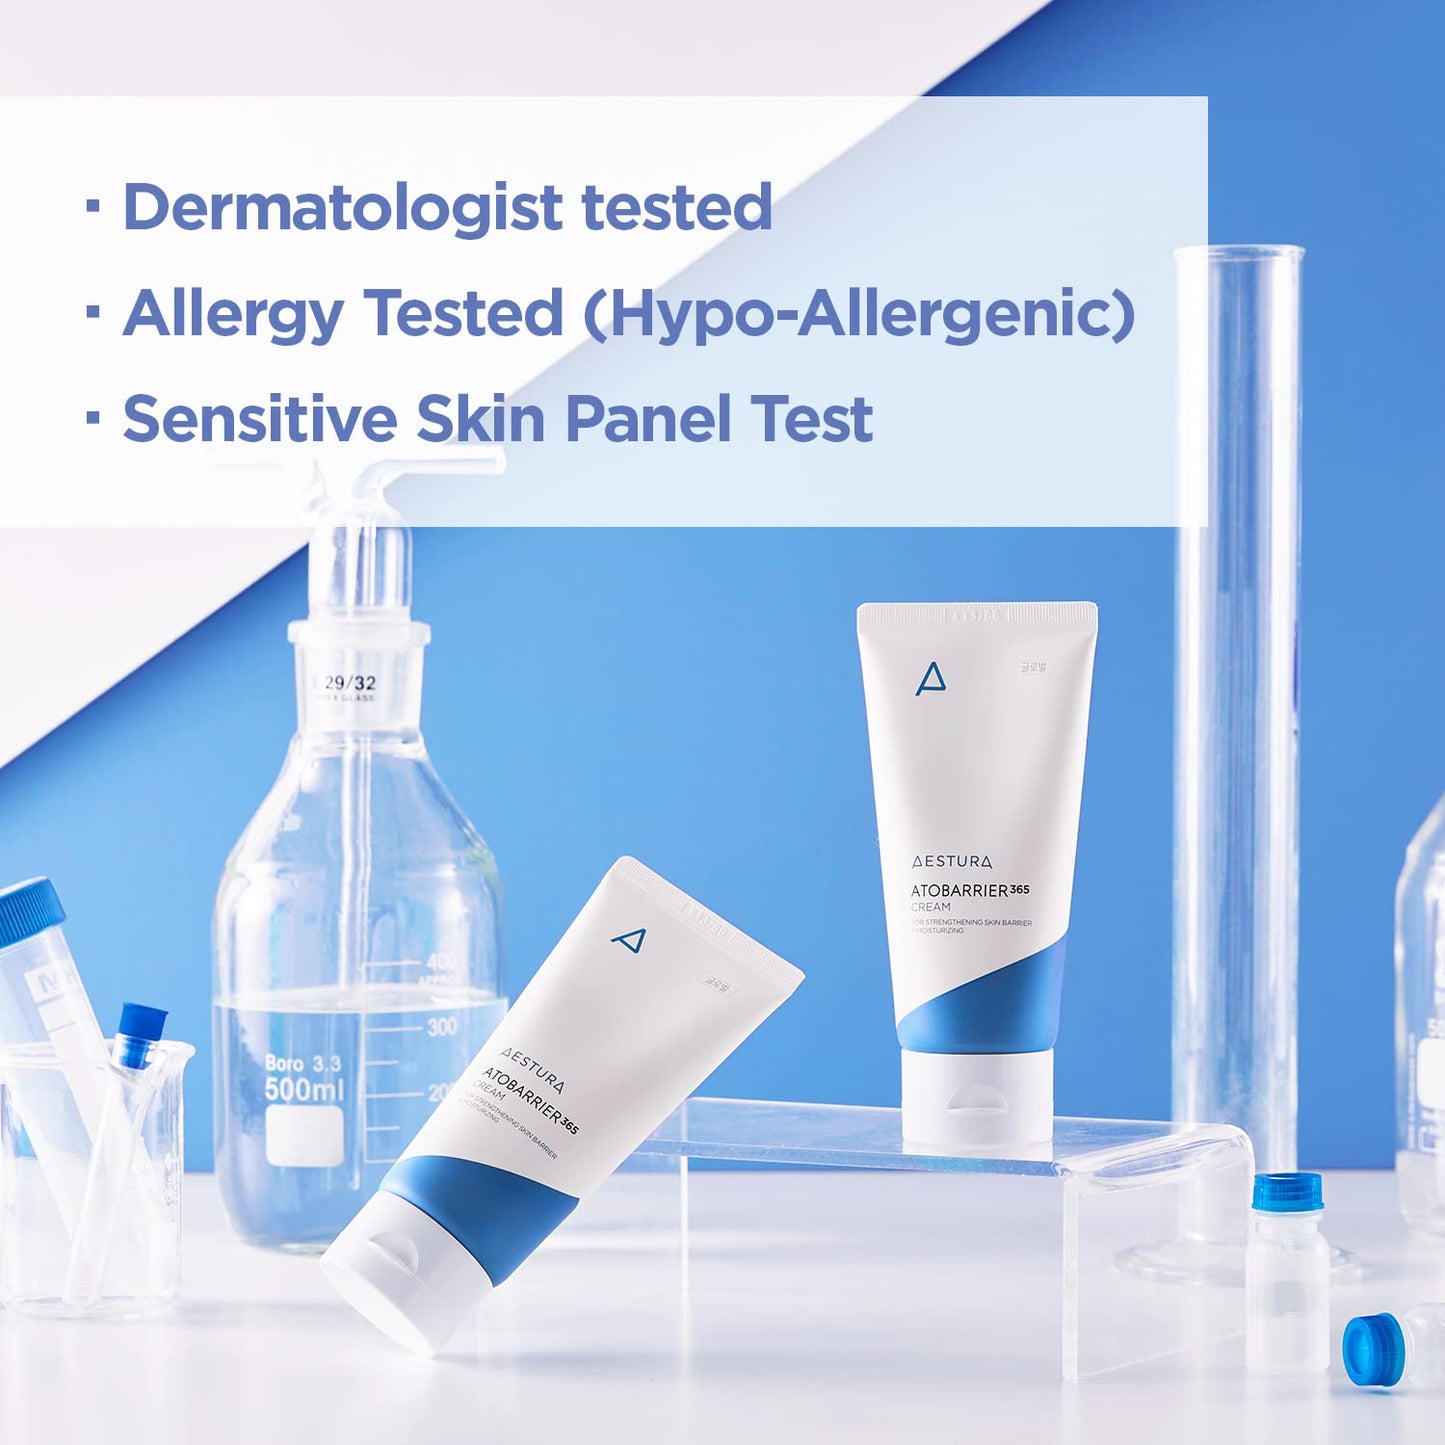 AESTURA ATOBARRIER365 Cream 80ML with Ceramide, Skin Barrier Repair Moisturizer, 100-Hour Lasting Hydration for Dry & Sensitive Skin, Cruelty Free, Hypoallergenic, Korean Skin Care